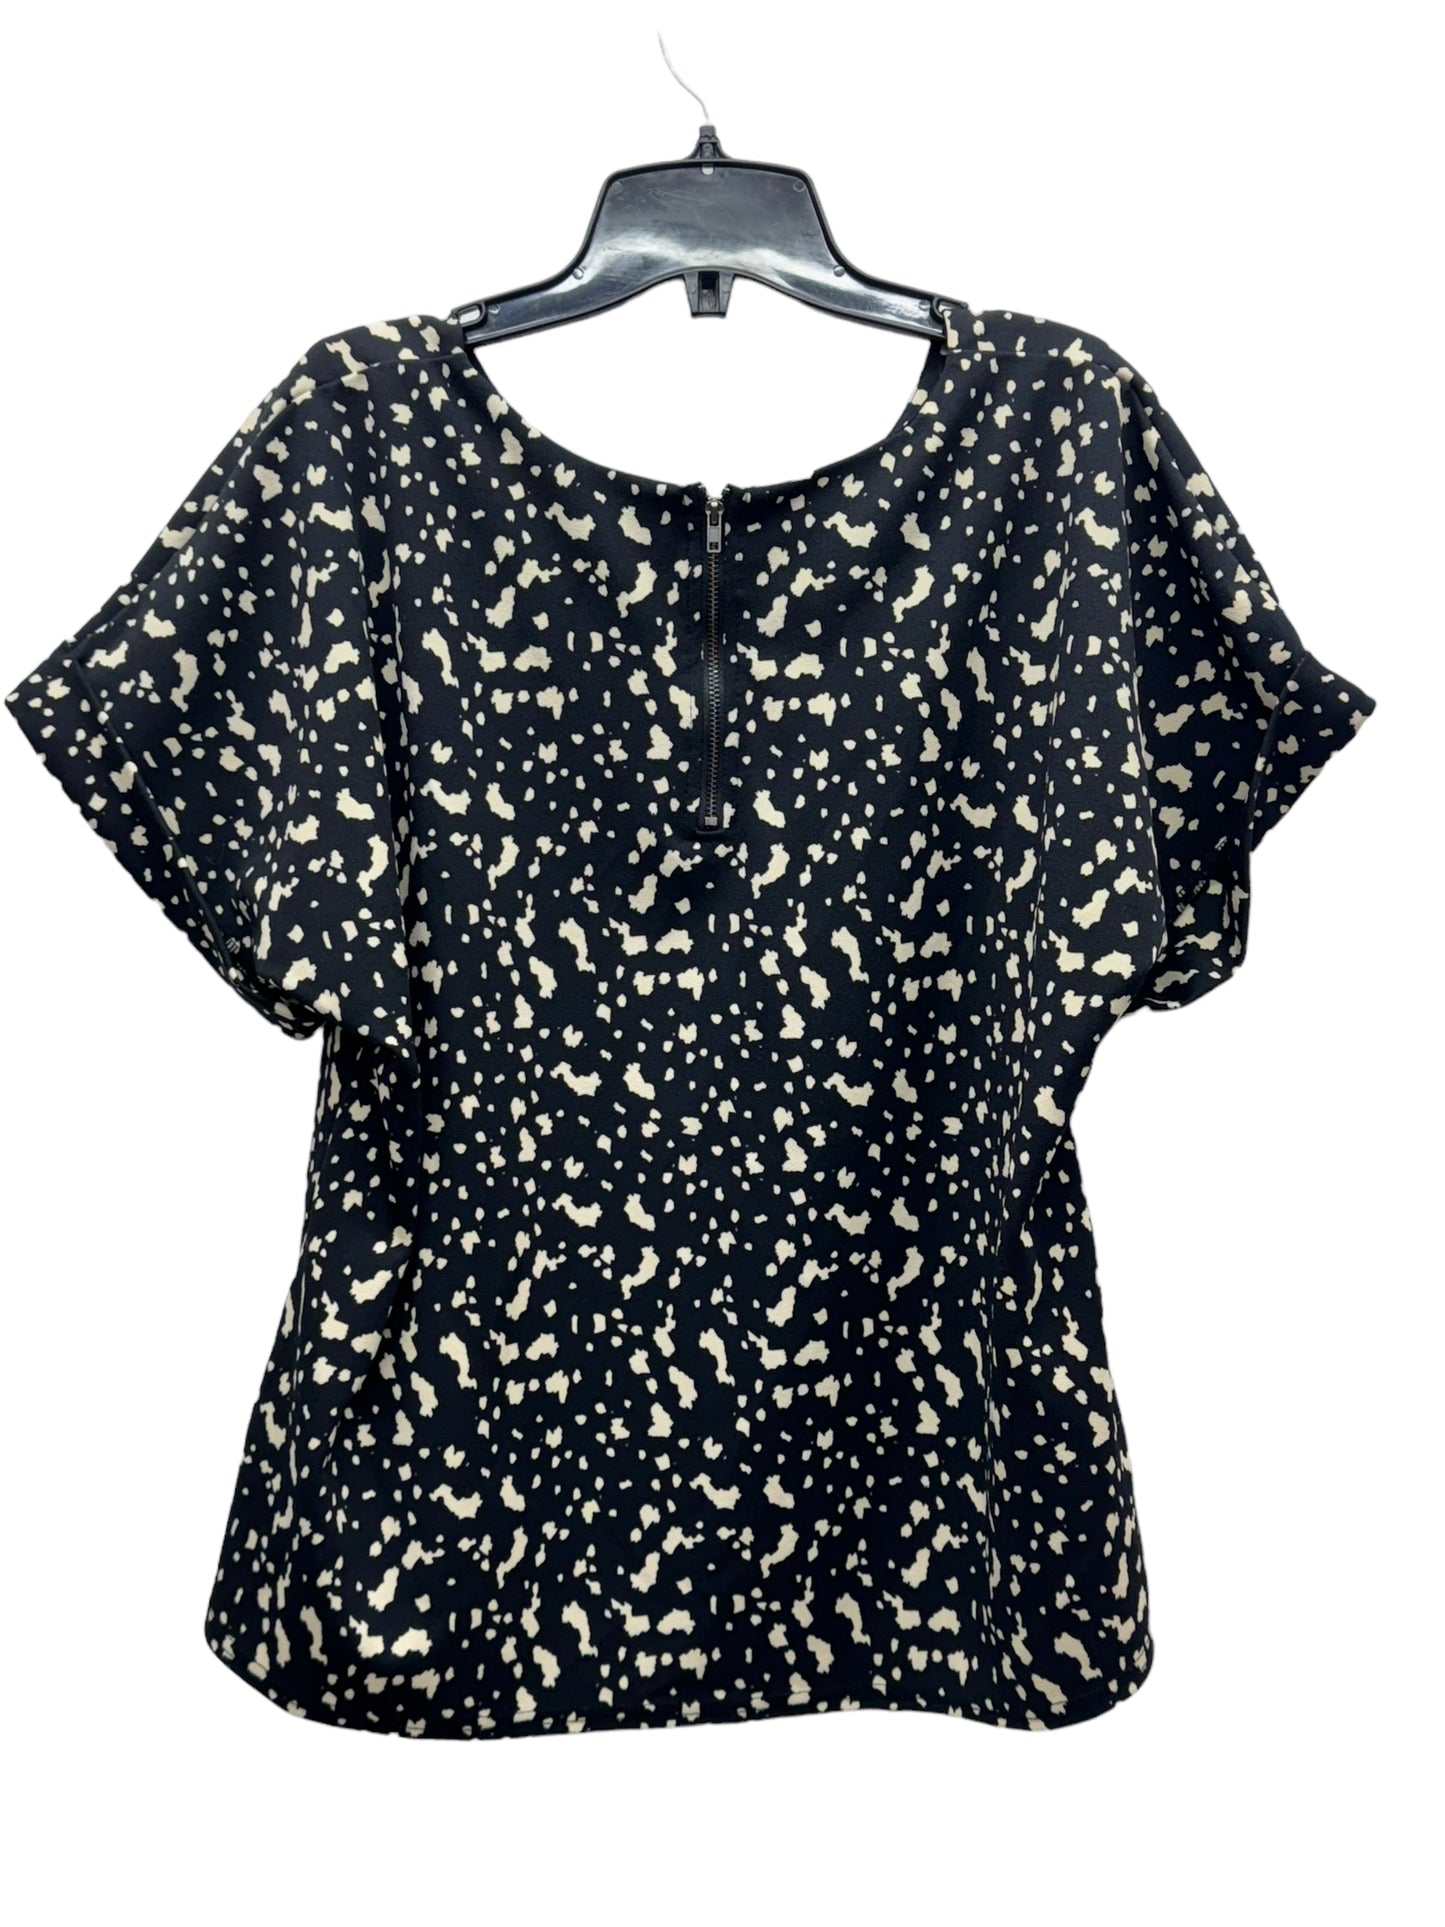 Melloday Women’s Printed Short Sleeve Top Black/Cream - Size Large